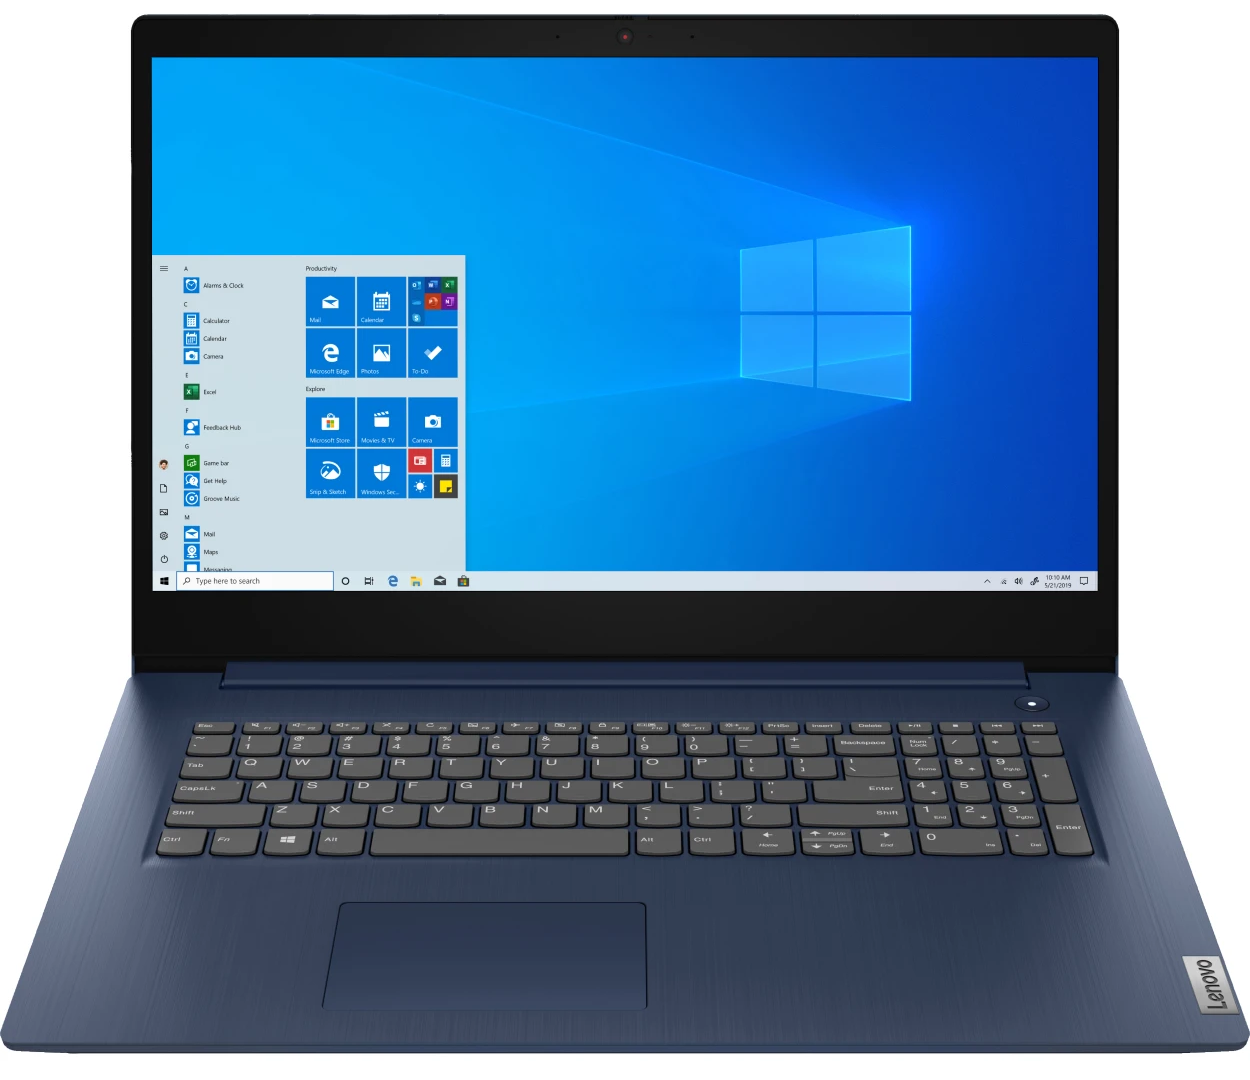 Lenovo Ideapad 3 i3 17.3" Laptop (Intel i3 11th Gen CPU) 1 TB HDD $399.99